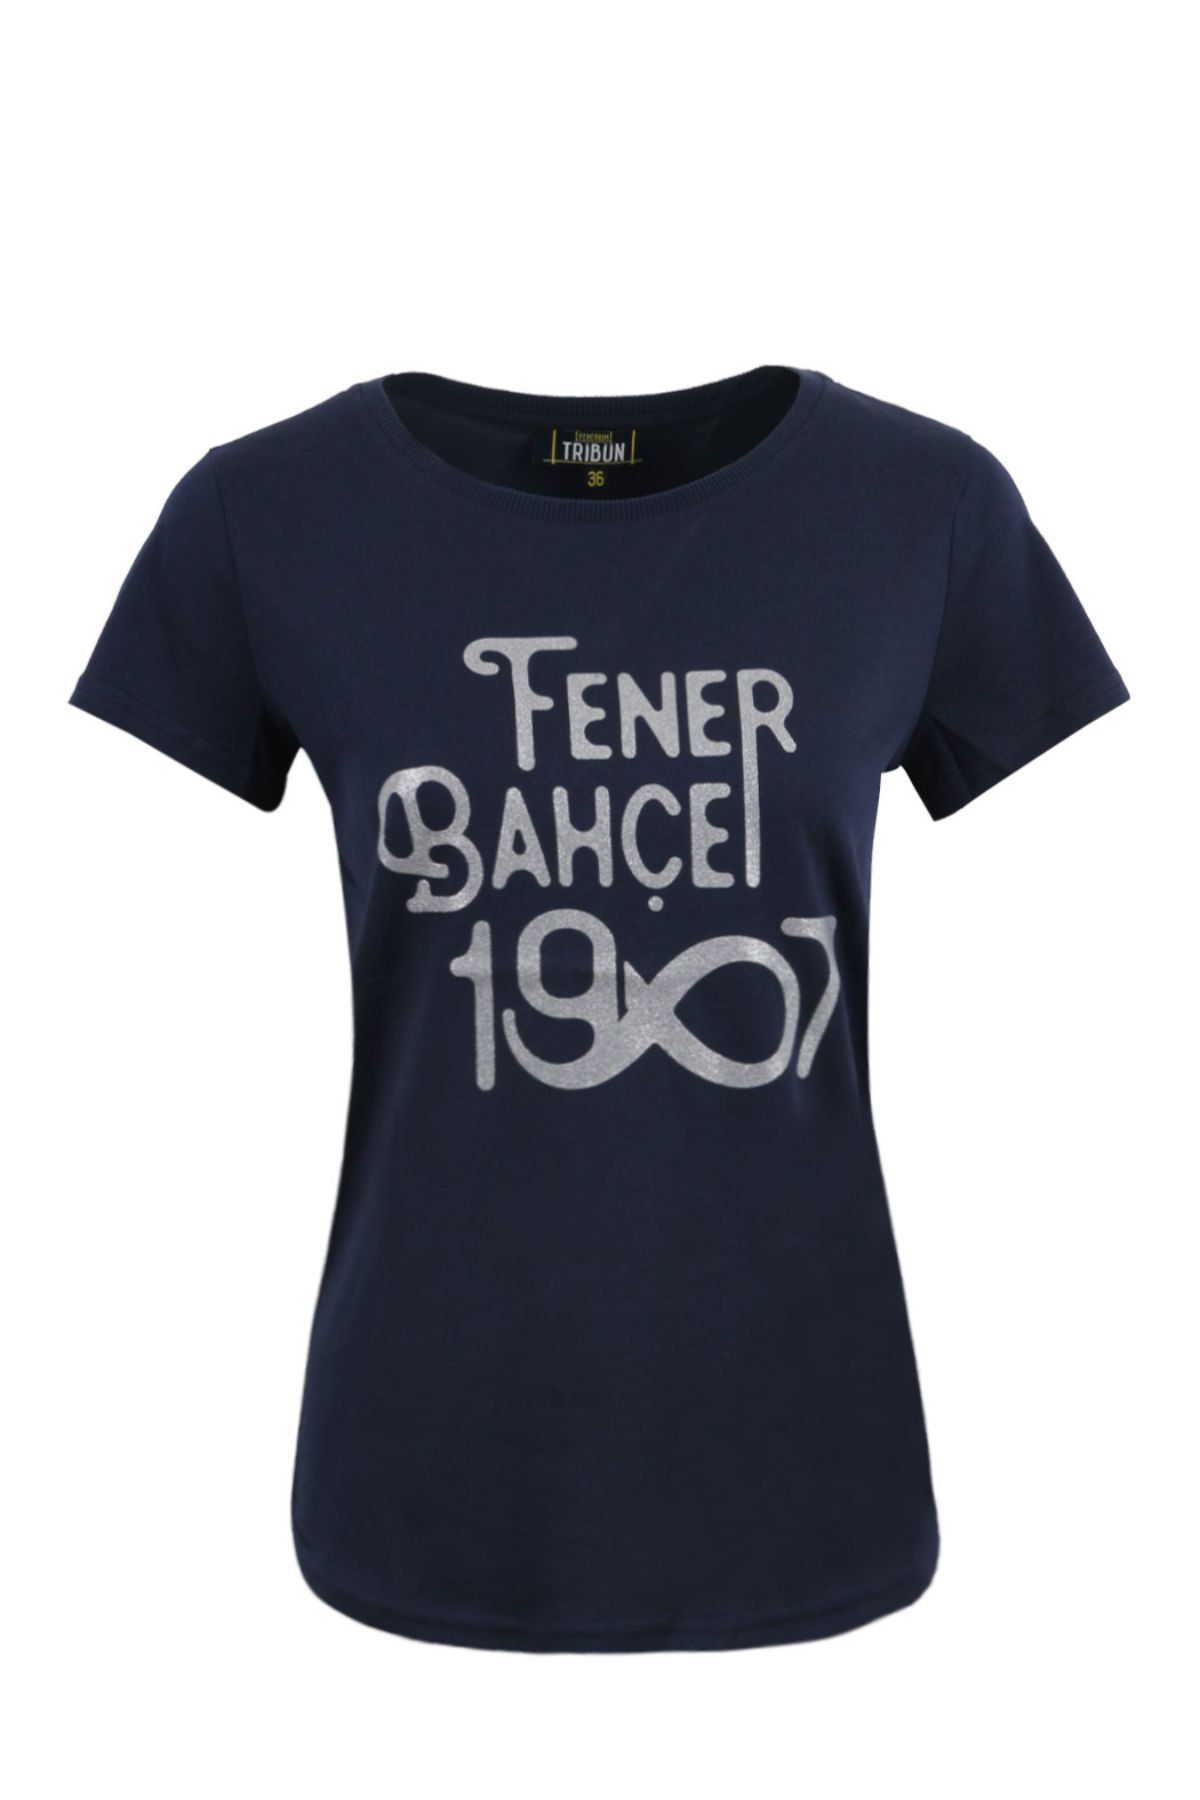 Fenerbahçe KADIN TRIBUN 1907 FENERBAHÇE T-SHIRT